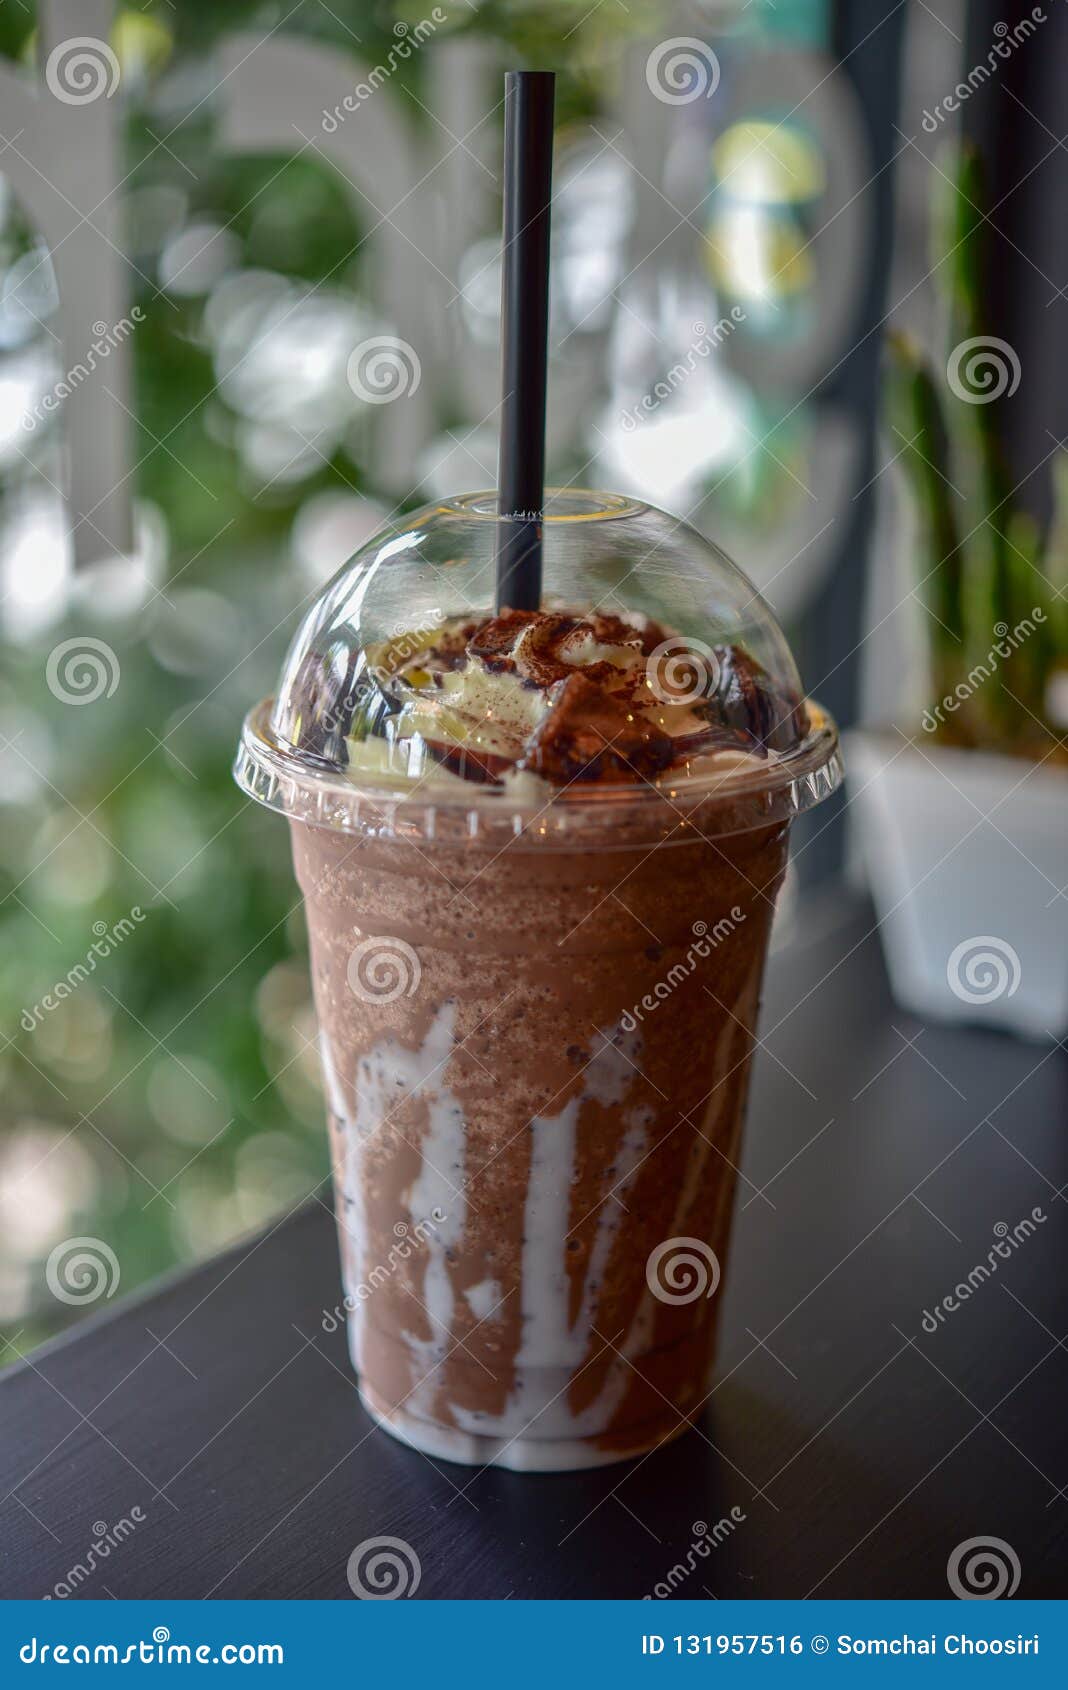 chocolate smoothie milkshake with jar in cafe